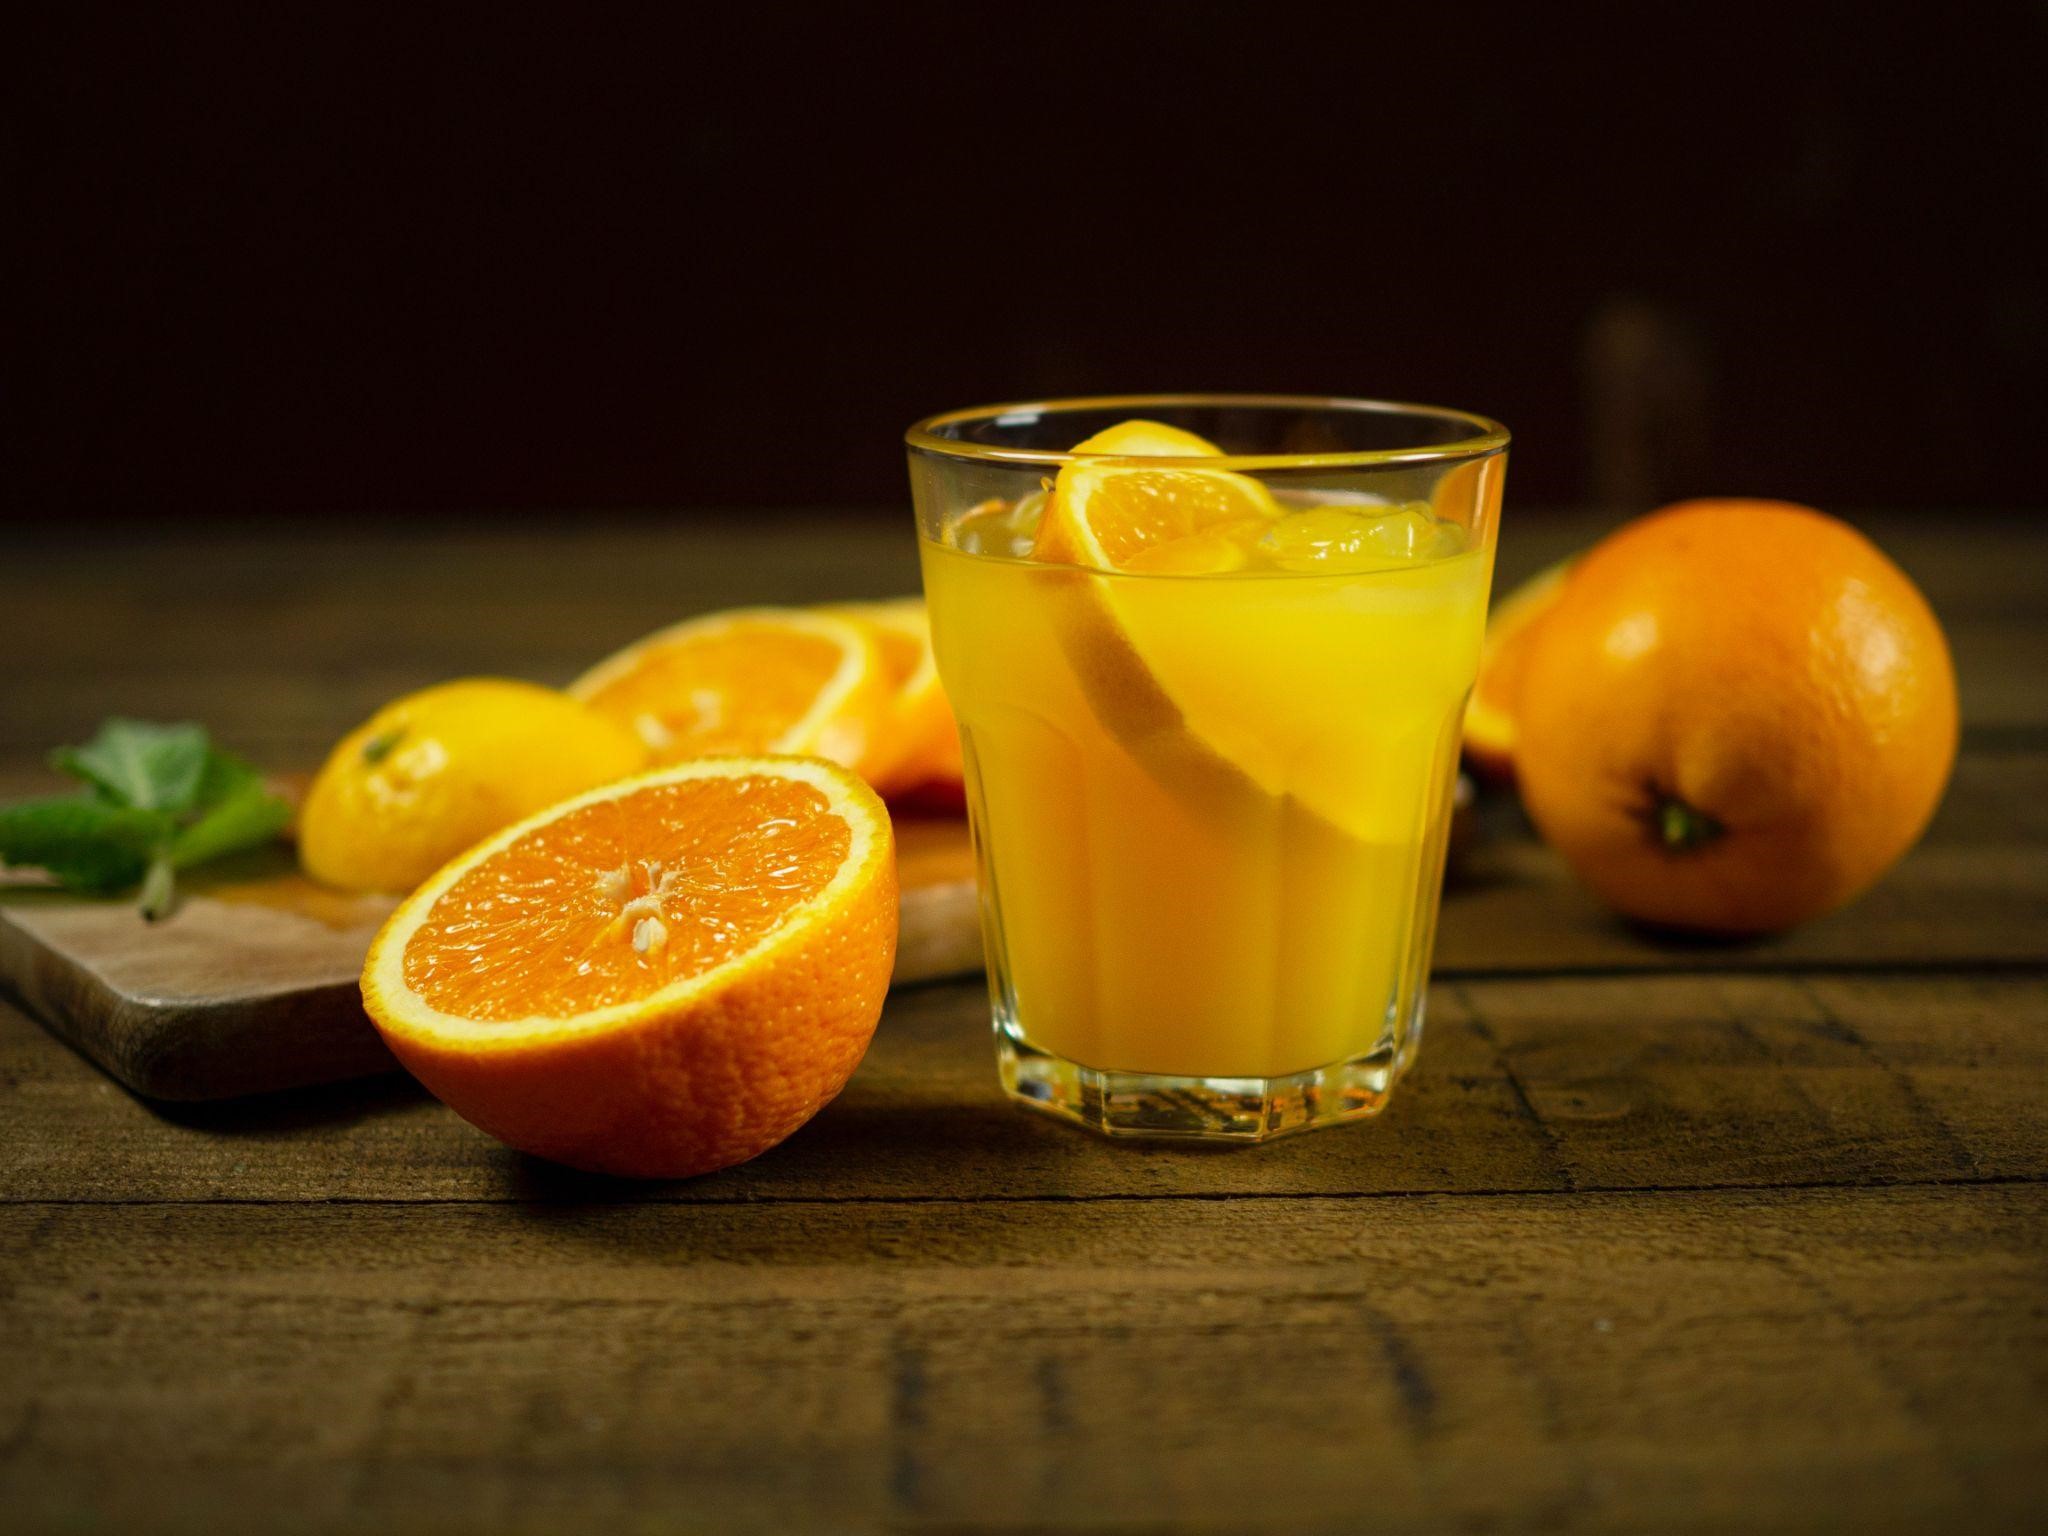 Oranges that you should prefer for juicing